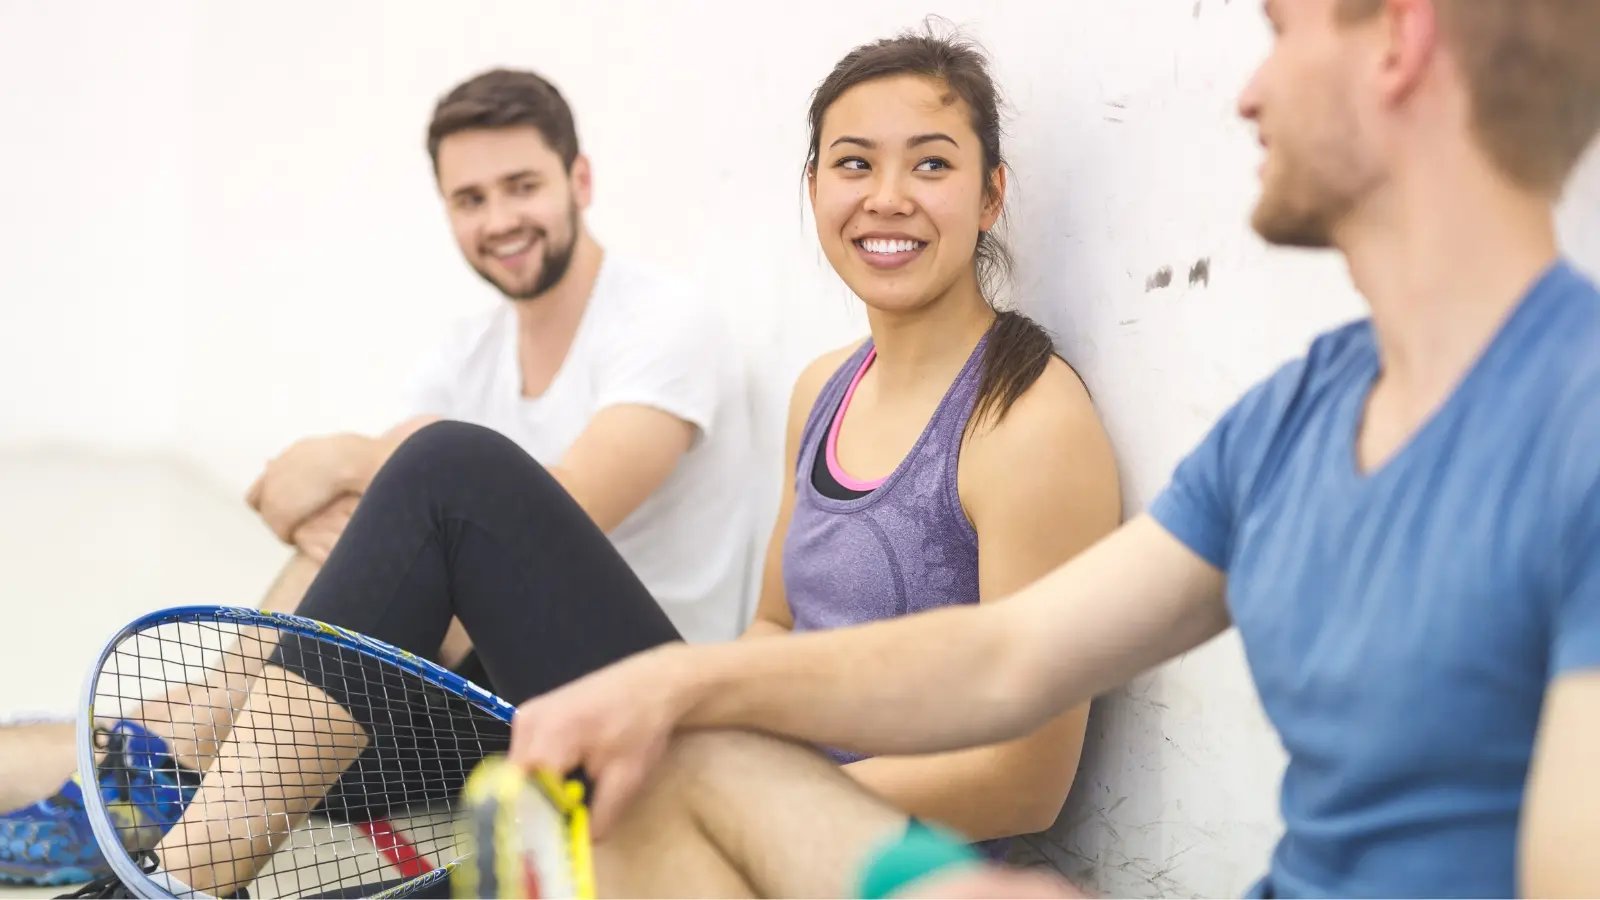 Promotes social interaction - Playing Racquetball